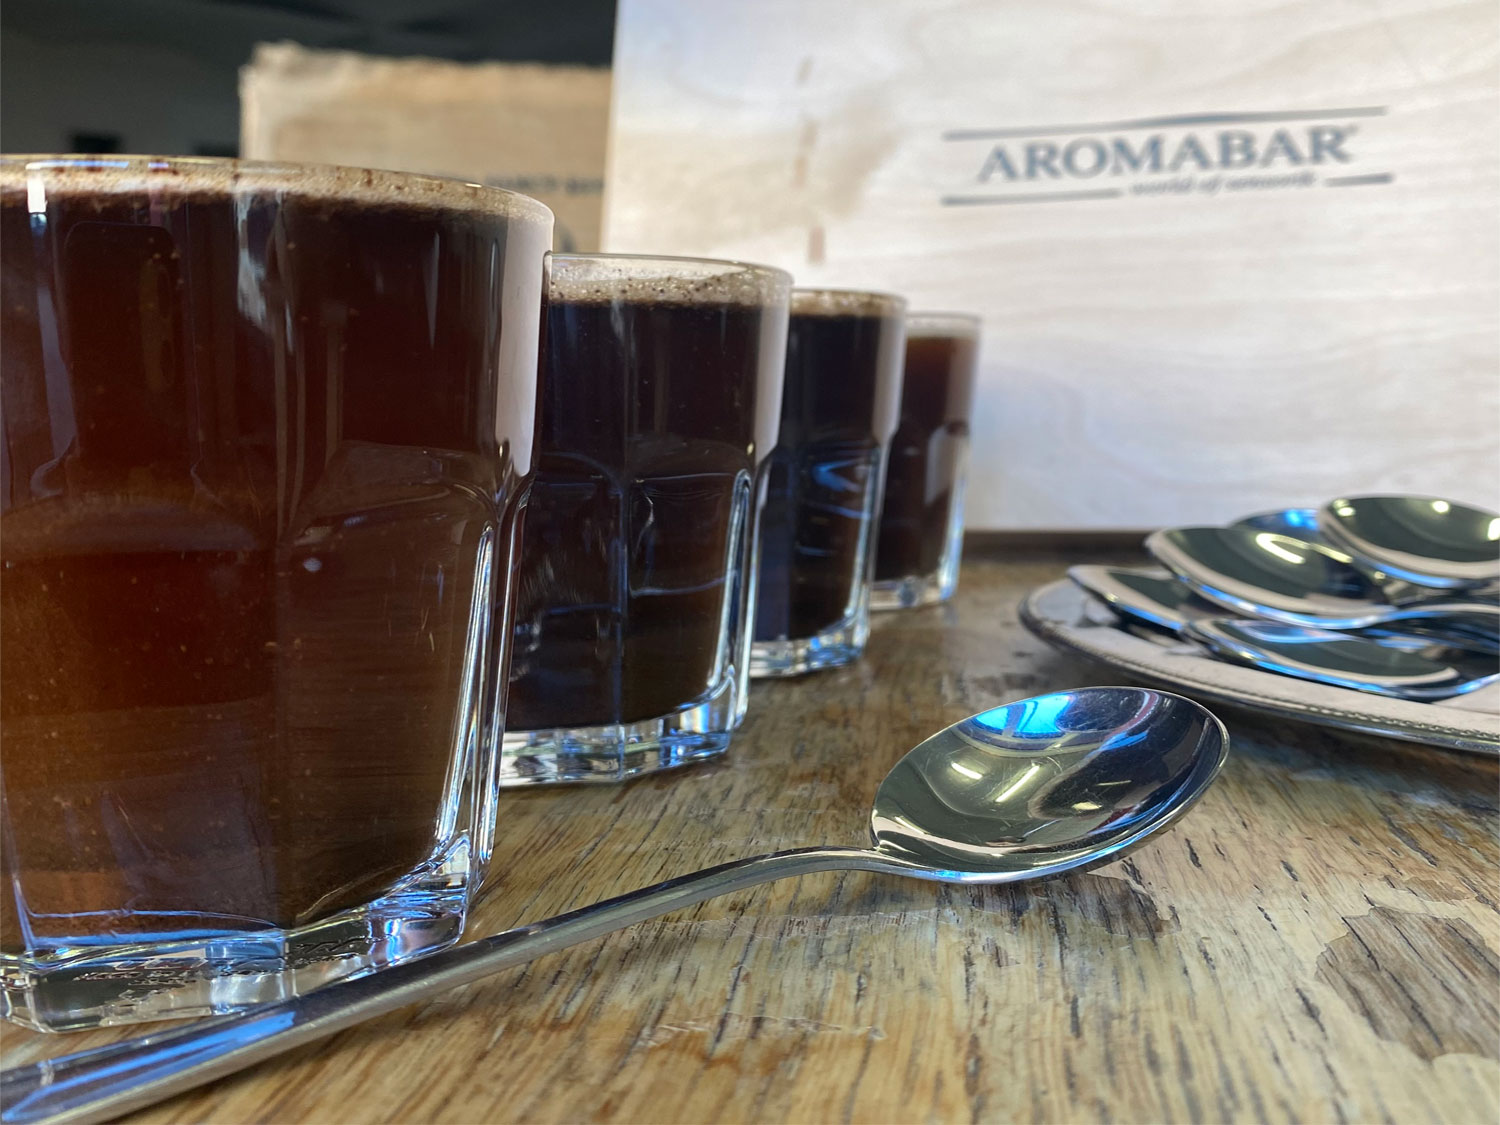 Aromabar - KFE Die Kaffeerösterei